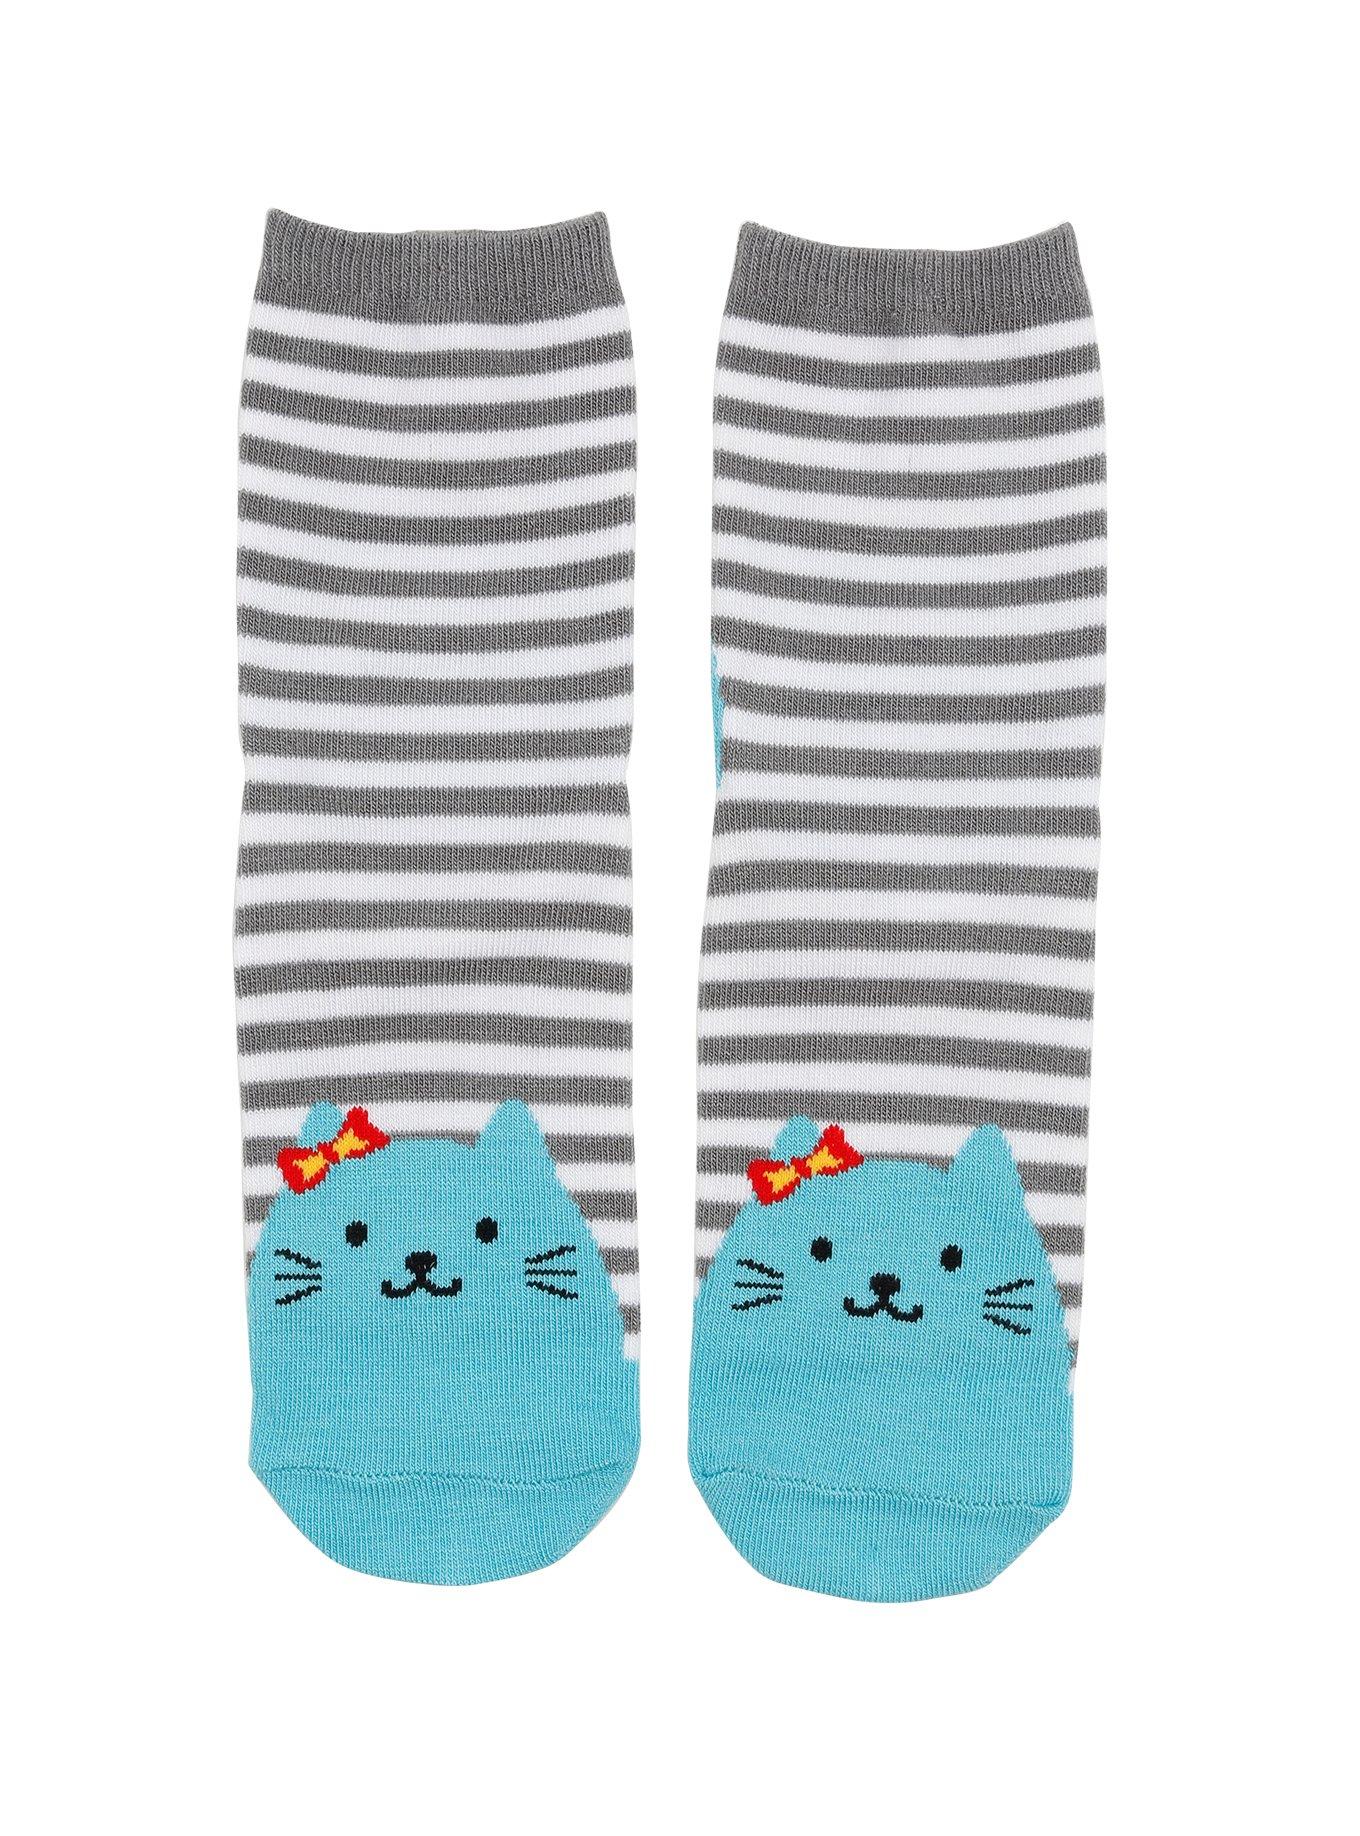 Striped Toe Cat Ankle Socks, , hi-res